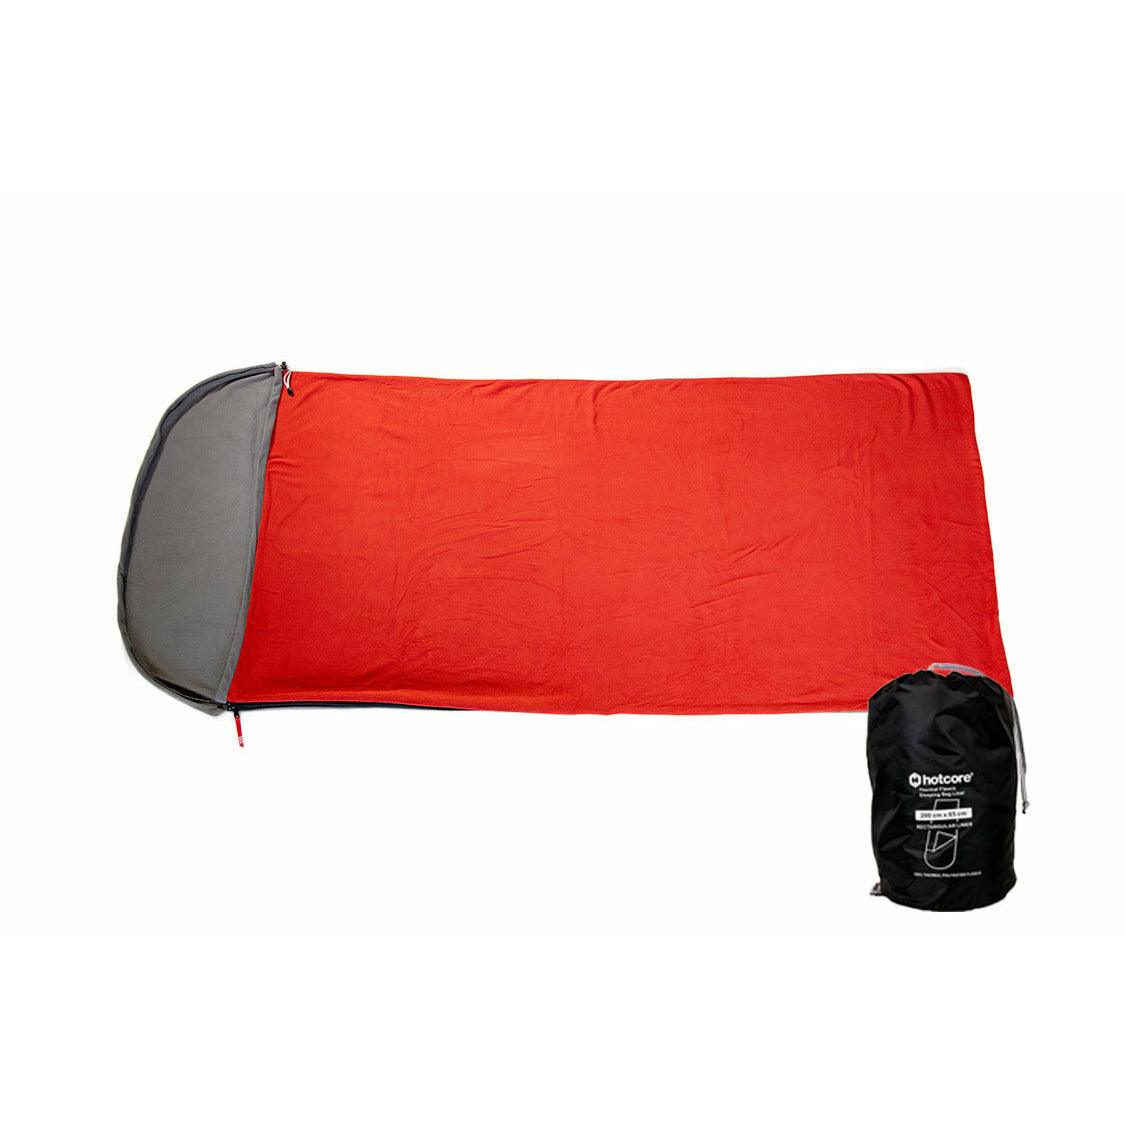 Hotcore Sleeping Bag Fleece Liner